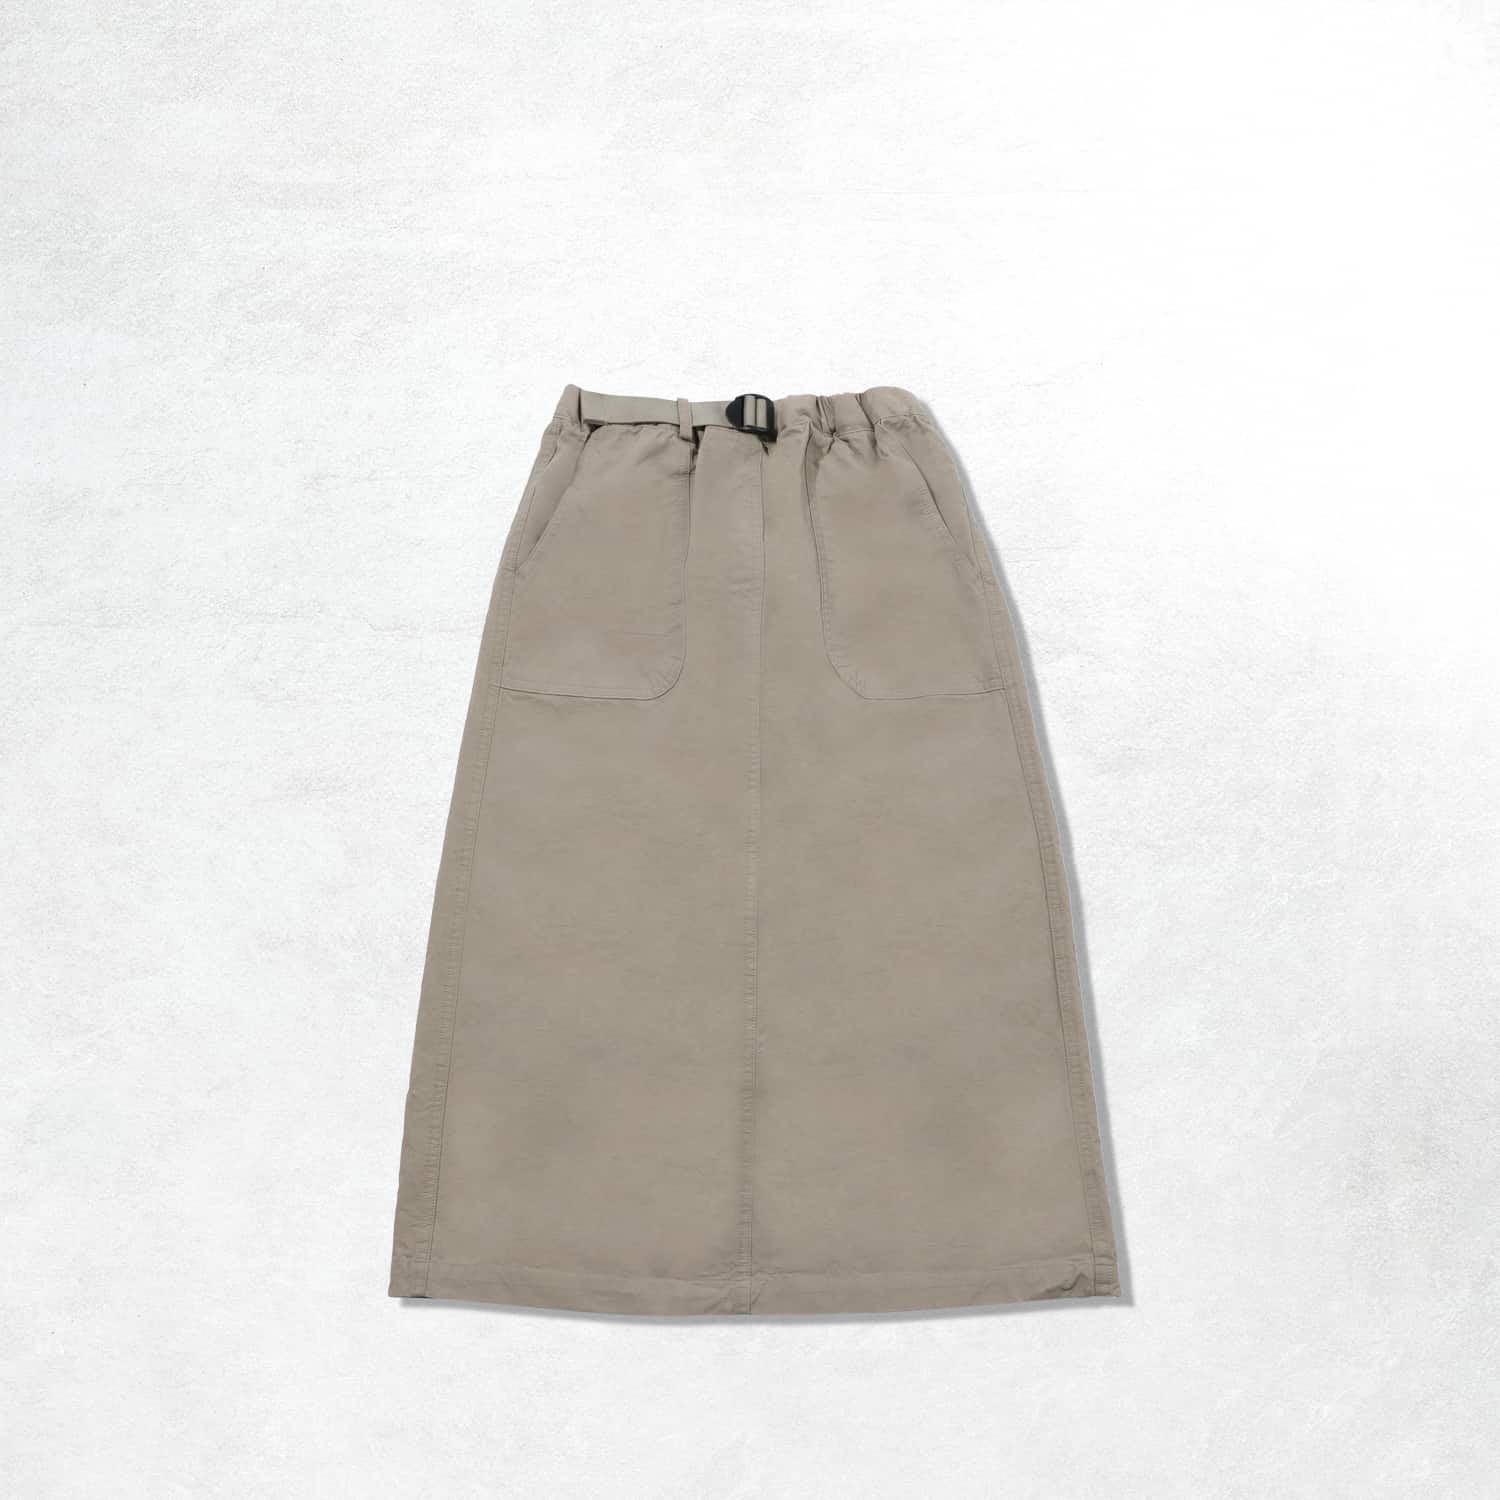 Kappy Cotton Fatigue Skirt: Beige